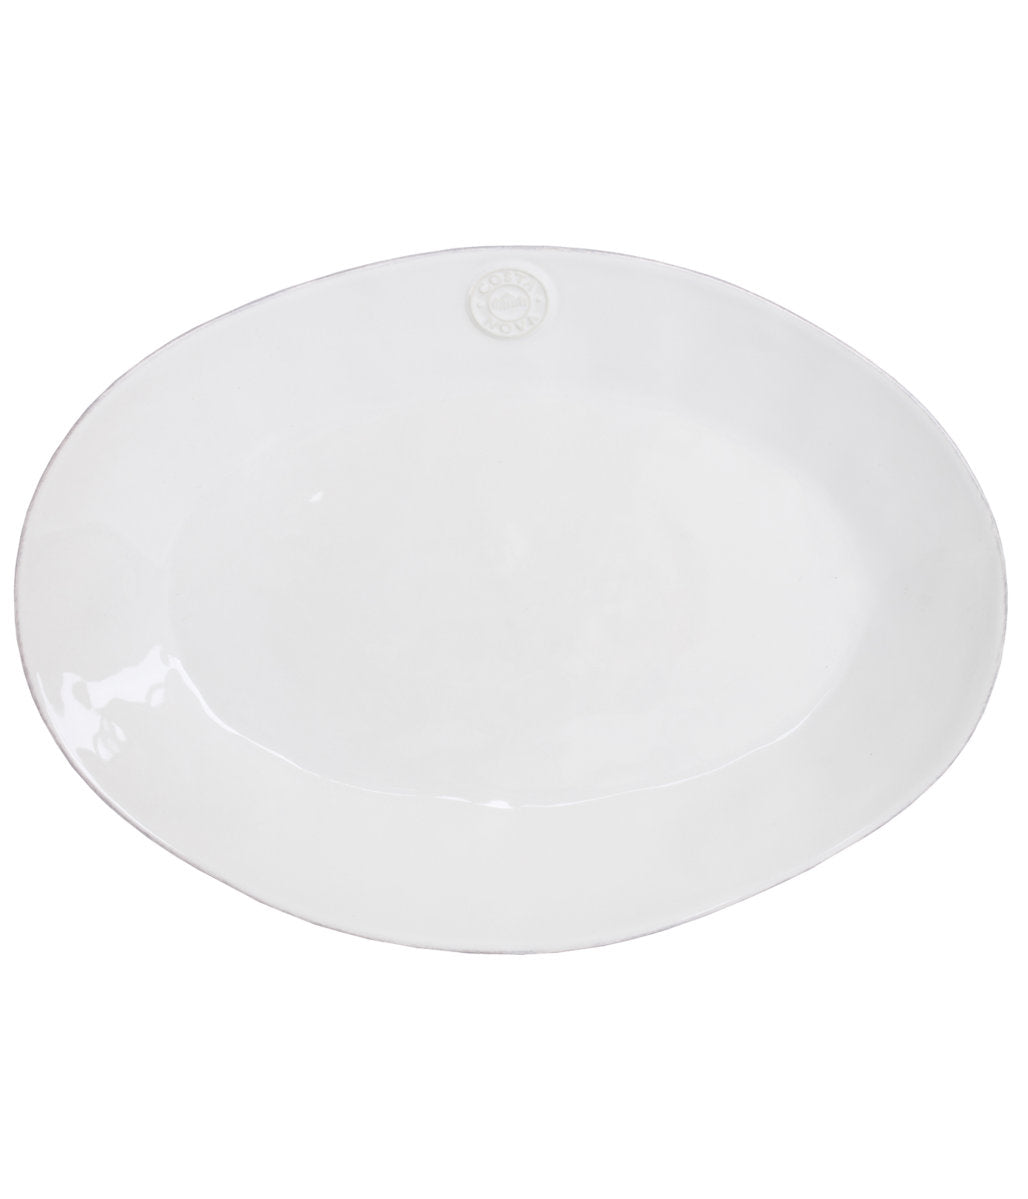 Costa Nova Oval Platter 40cm White